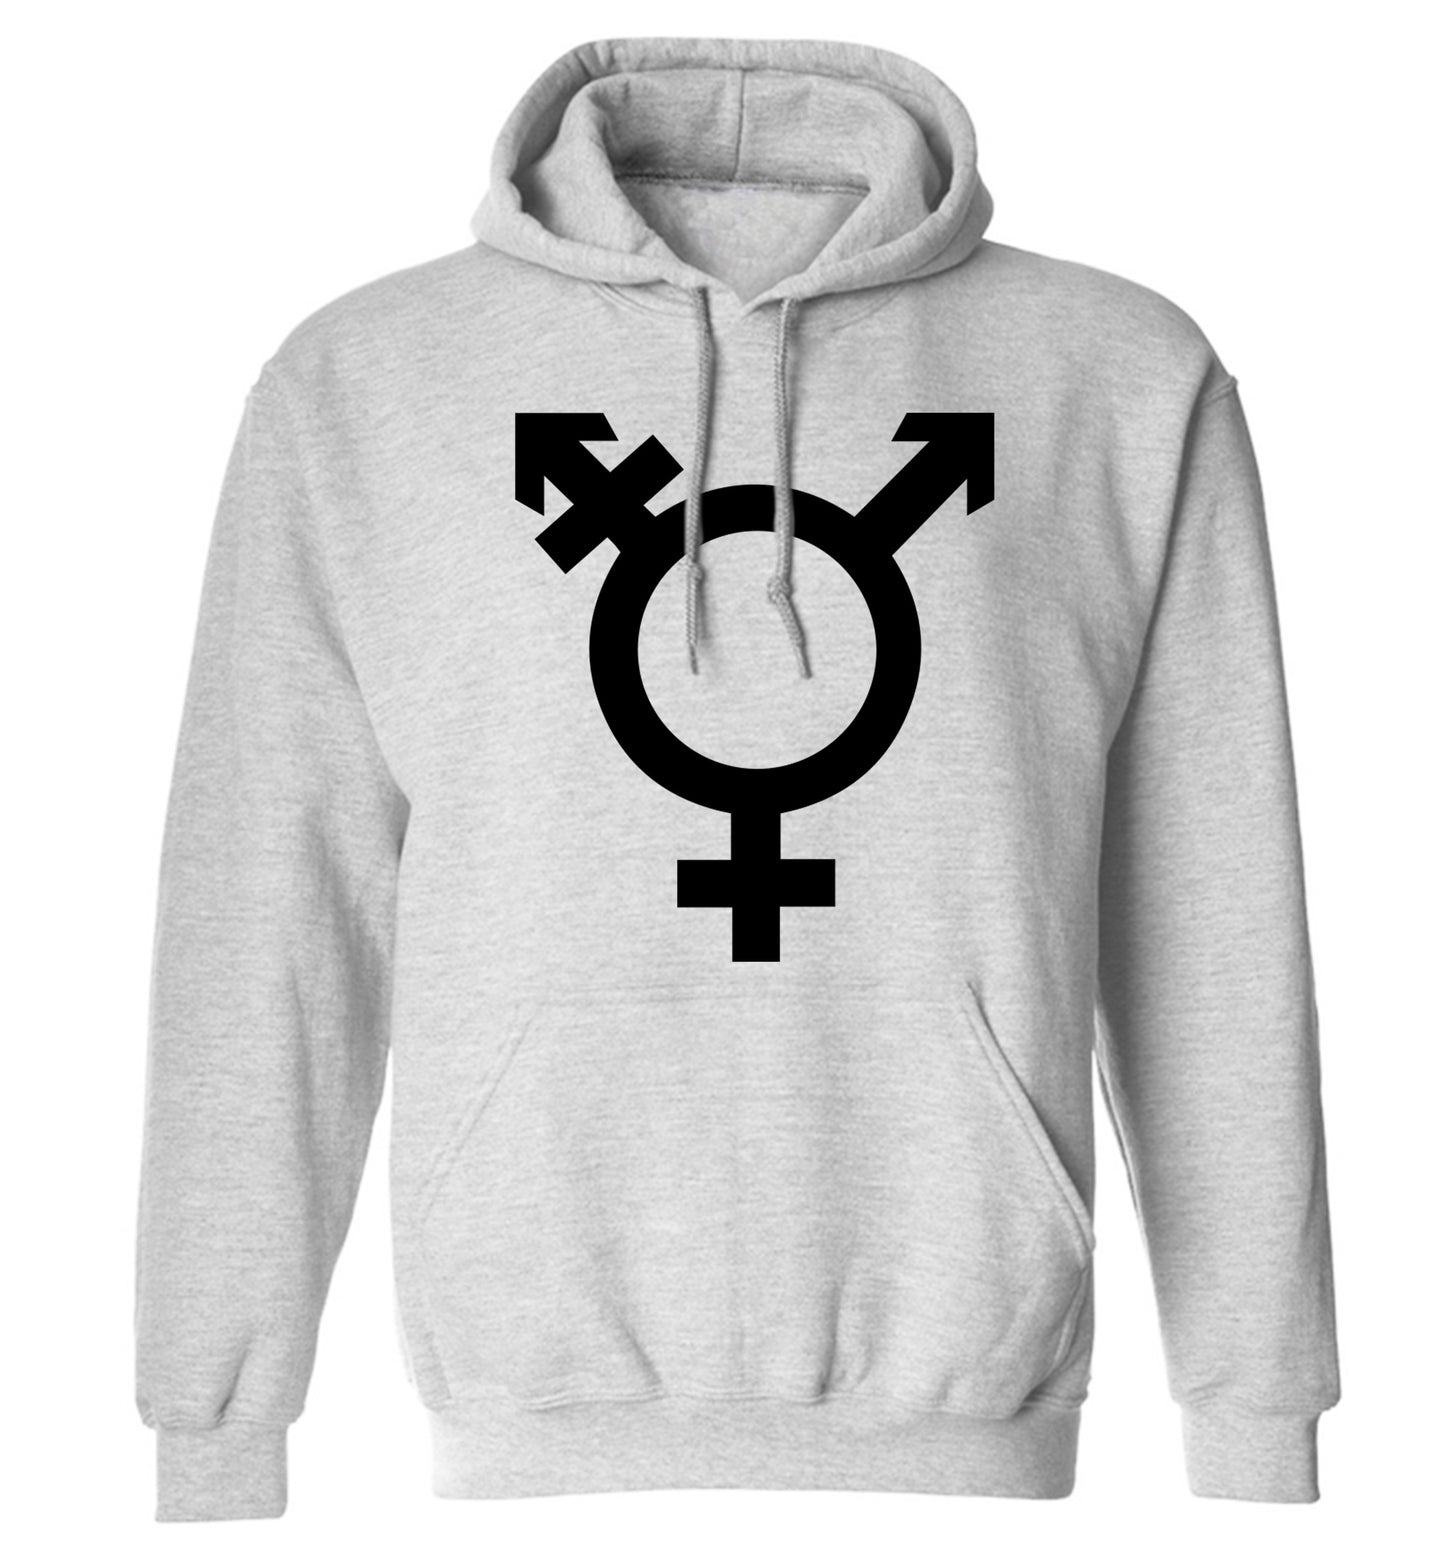 Gender neutral symbol large adults unisex grey hoodie 2XL